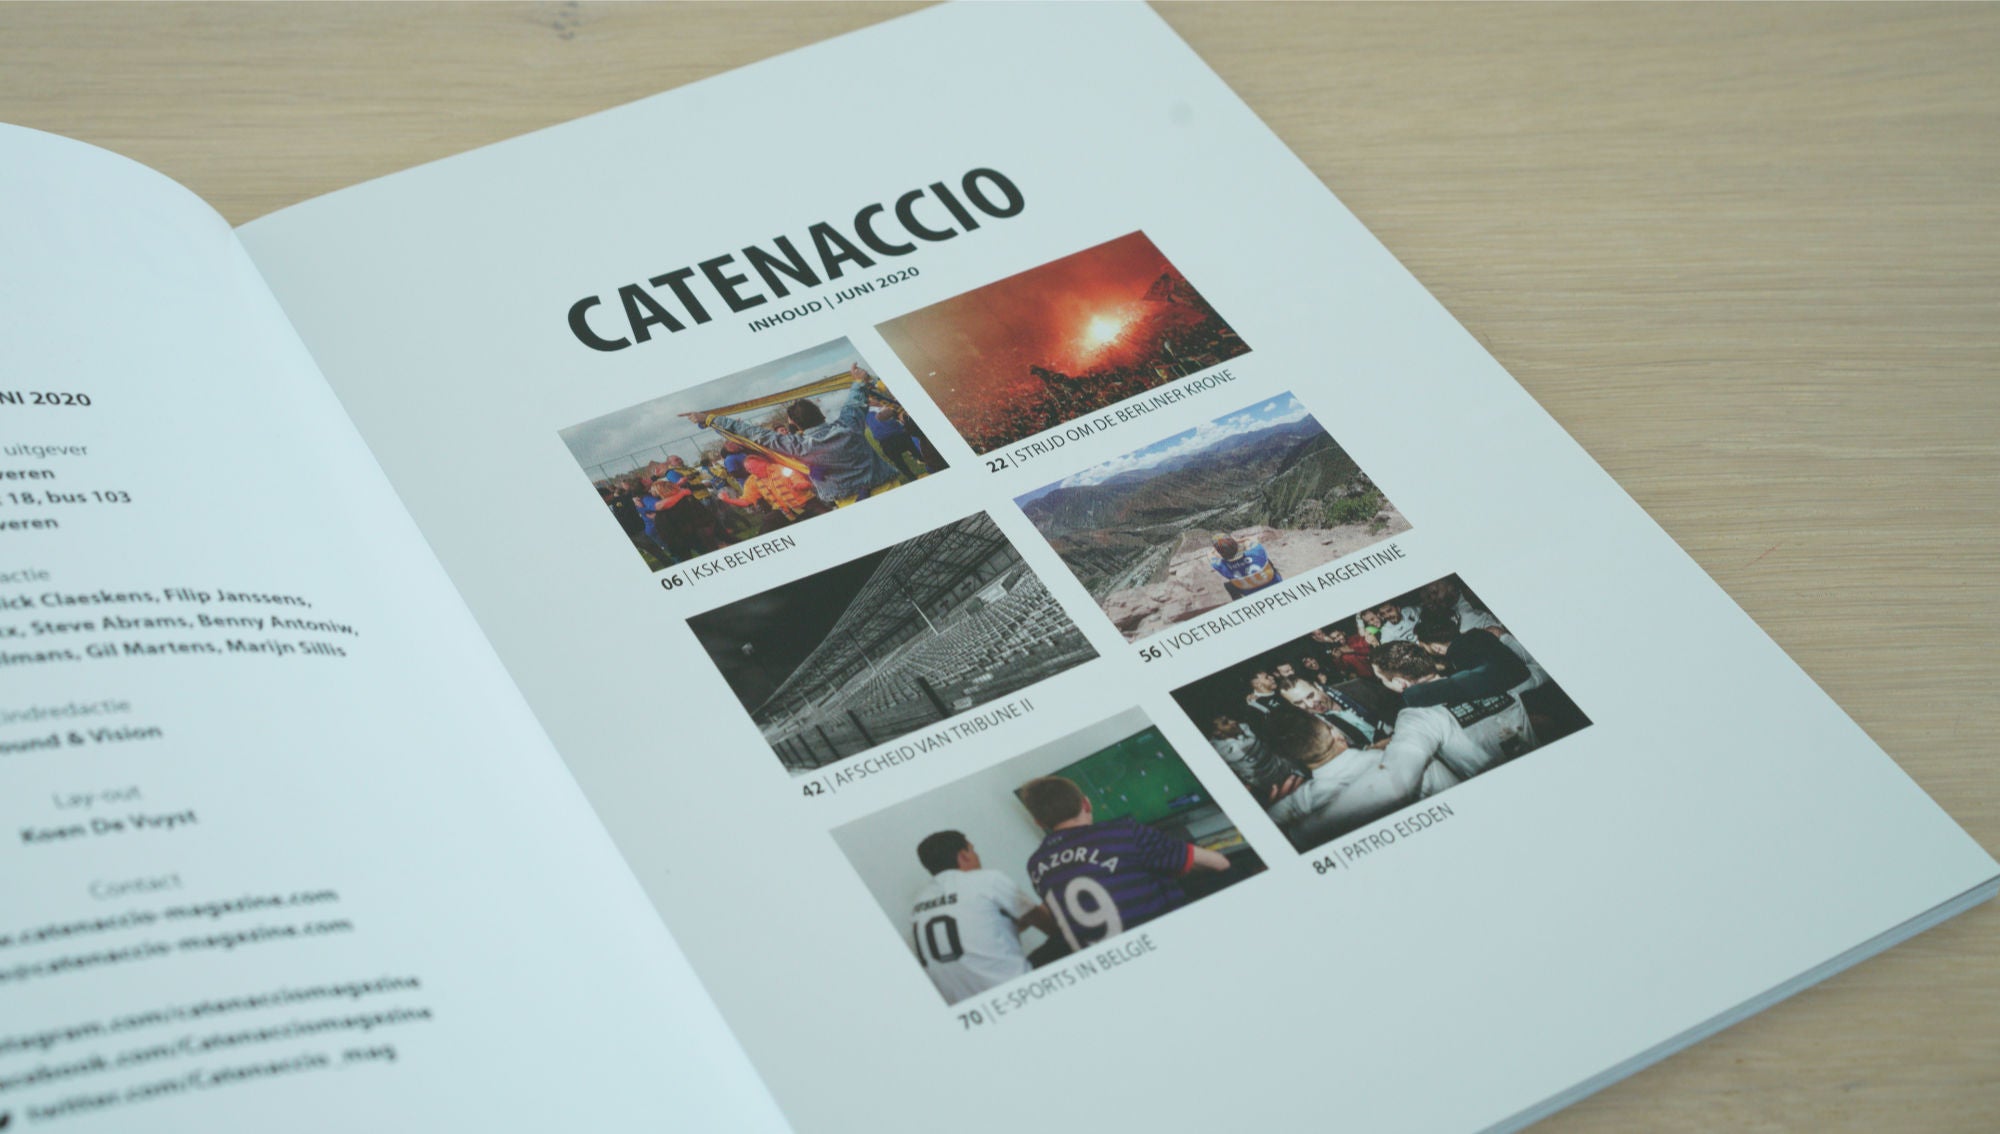 Catenaccio Magazine #6